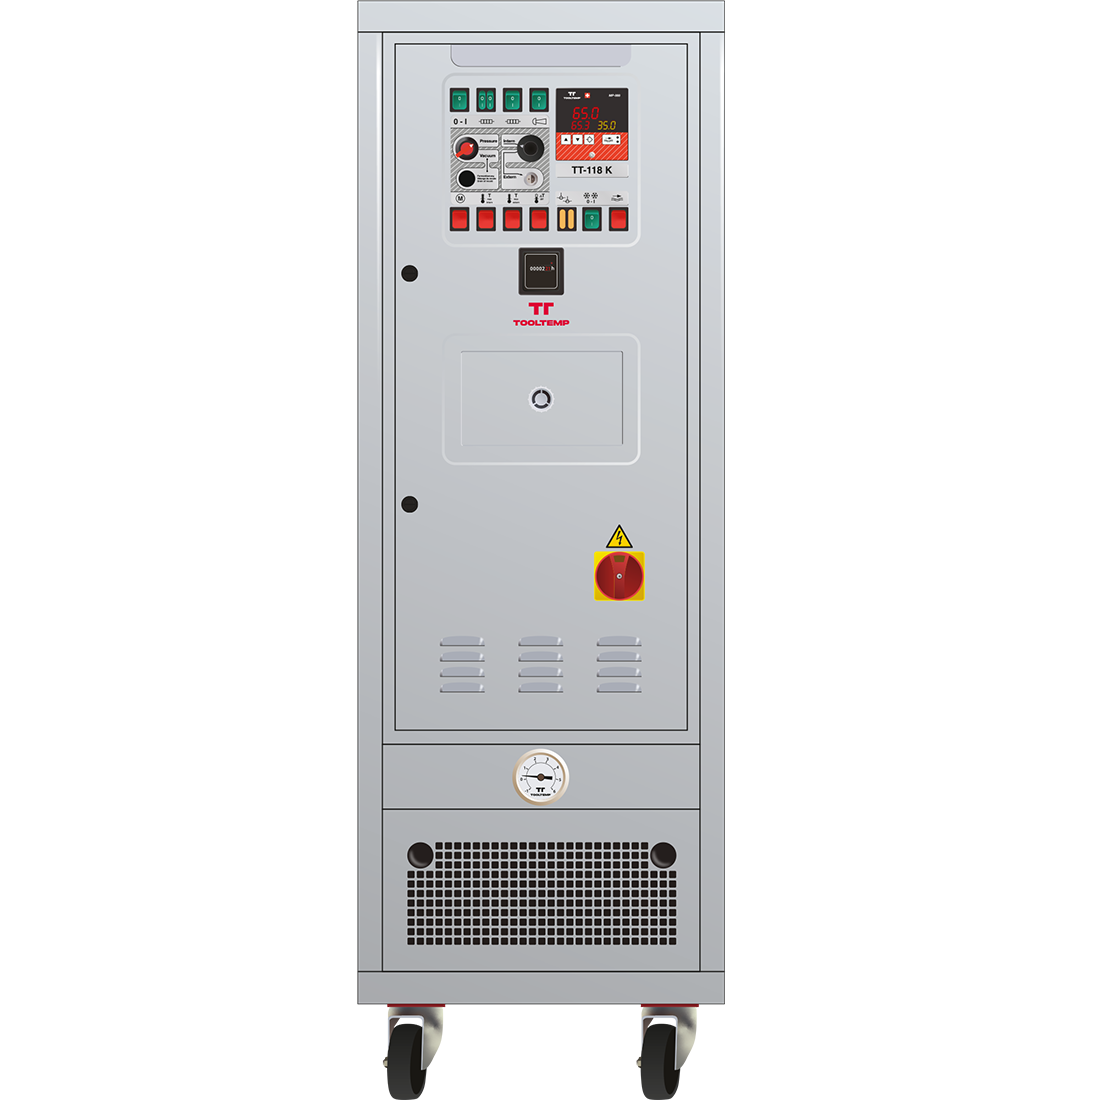 Tool-Temp - Water temperature control unit - CLASSIC Water TT-118 K 18 kW